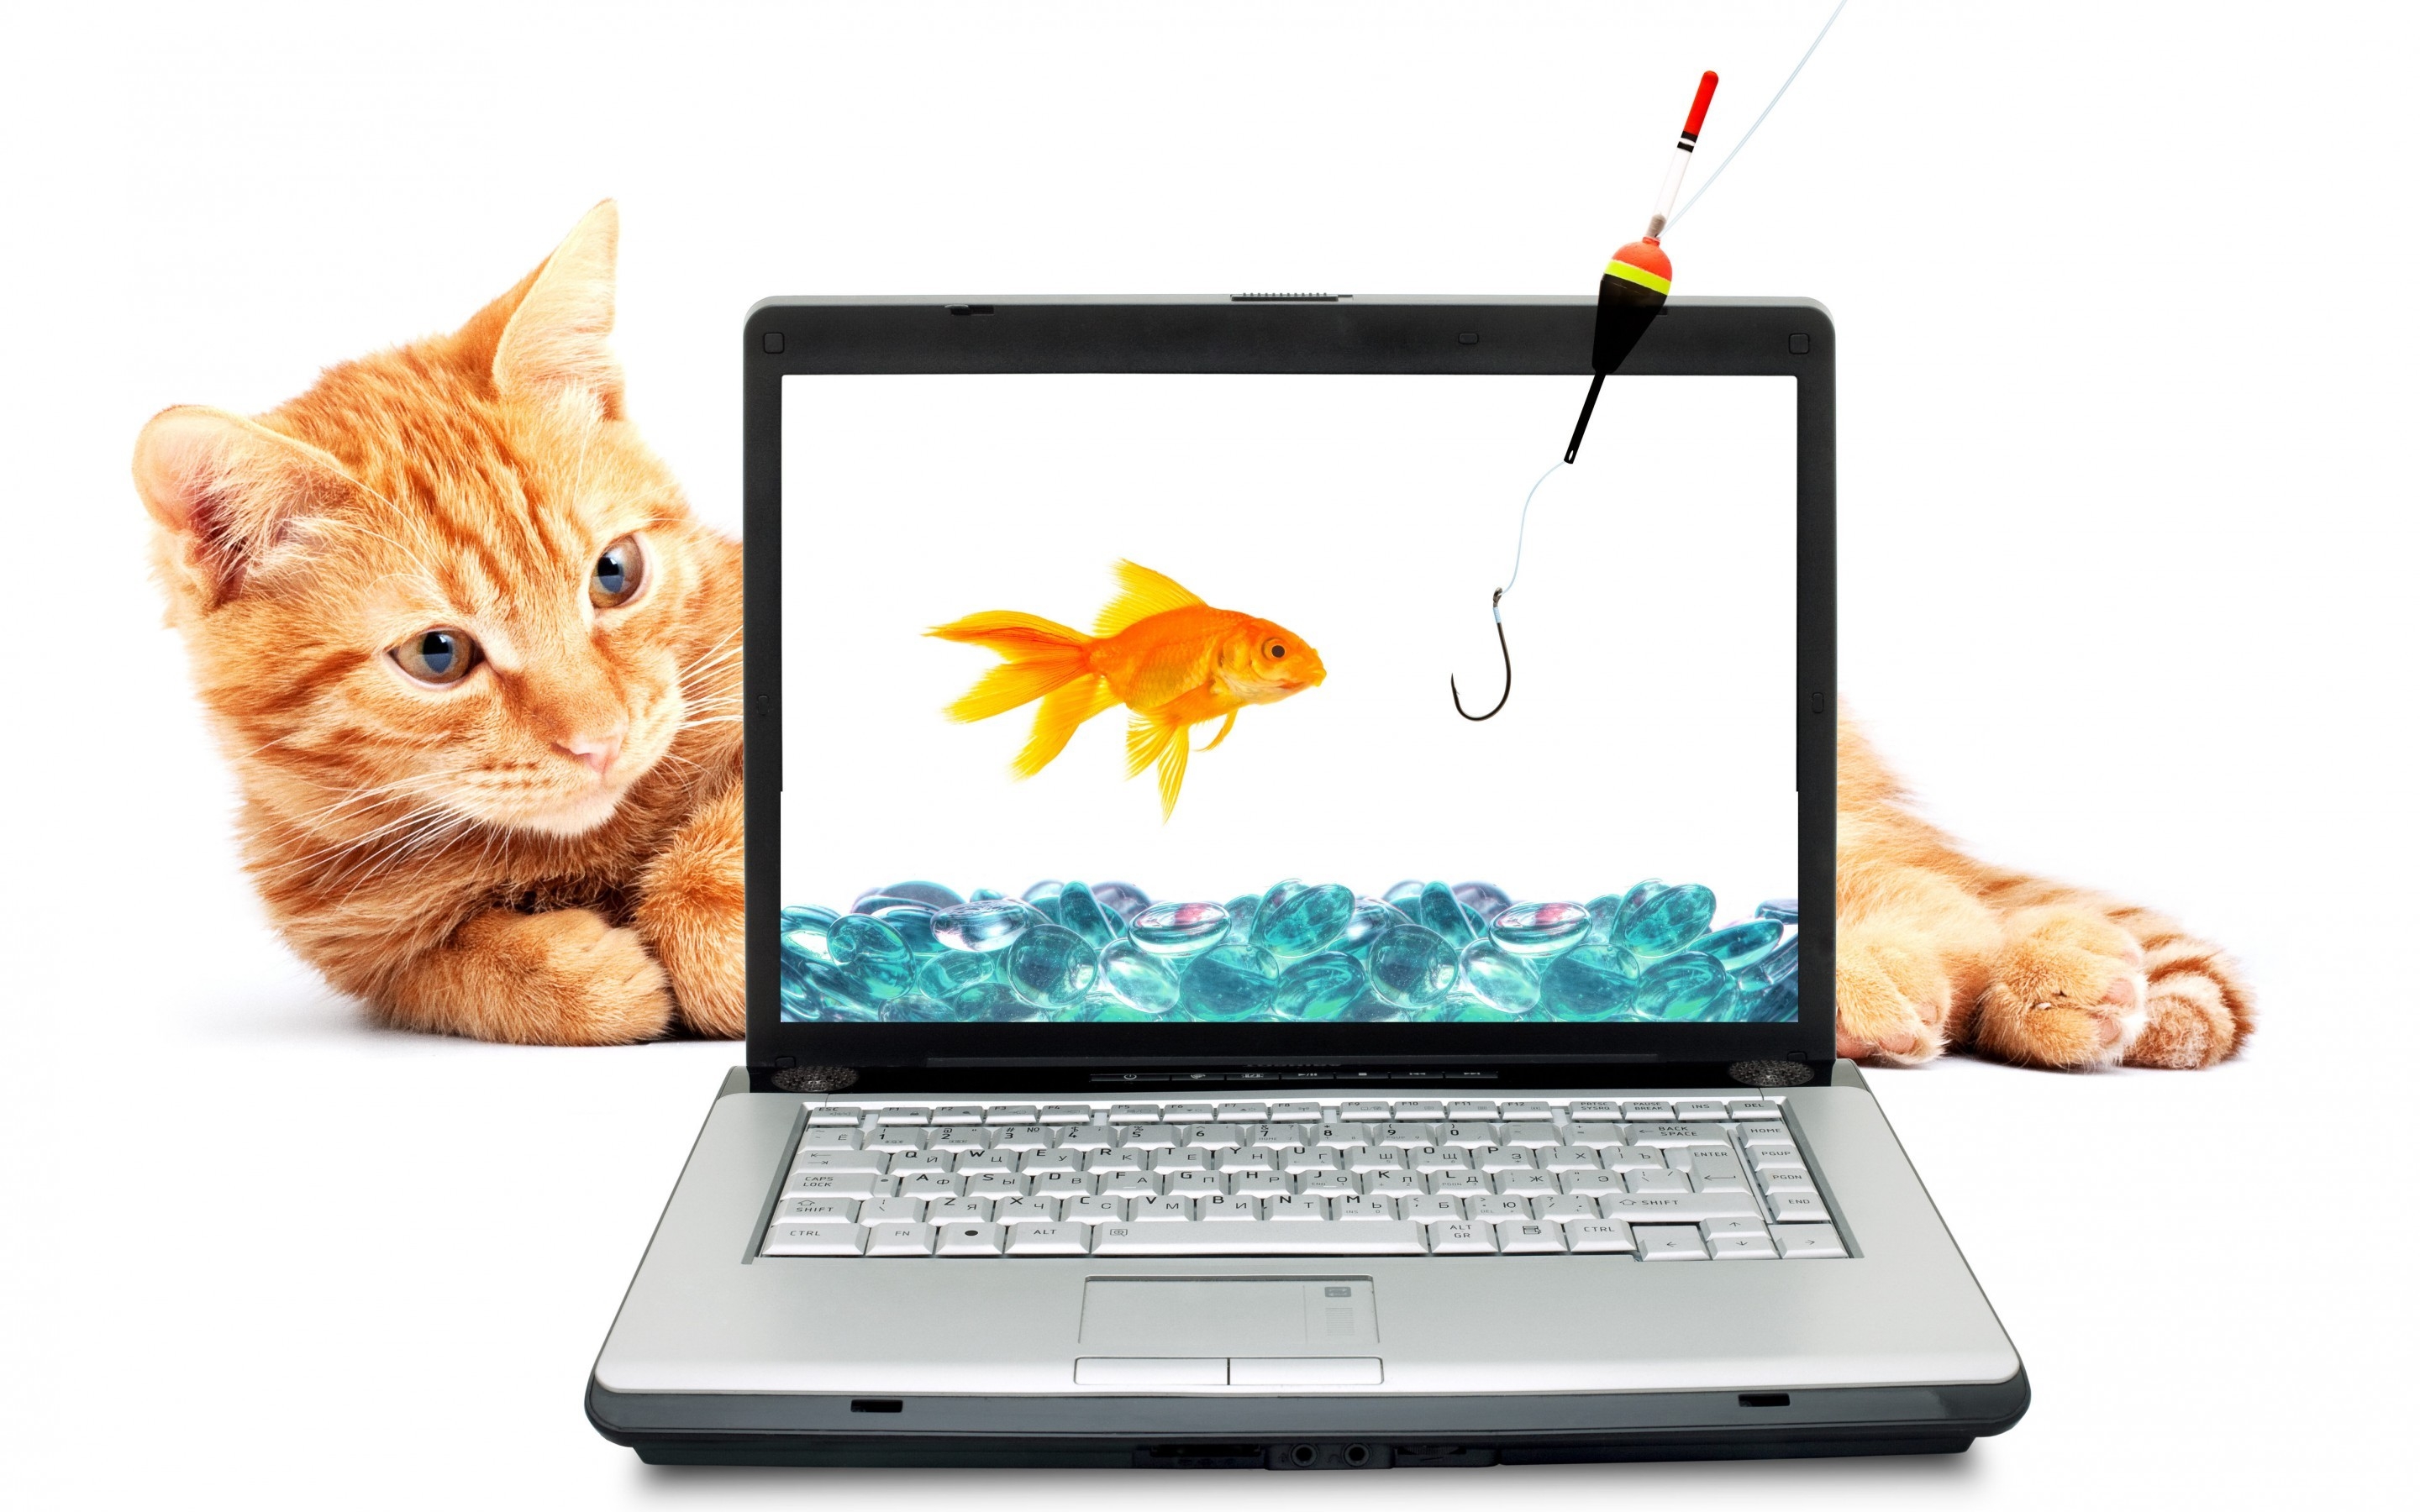 Fishing Cat for 2880 x 1800 Retina Display resolution